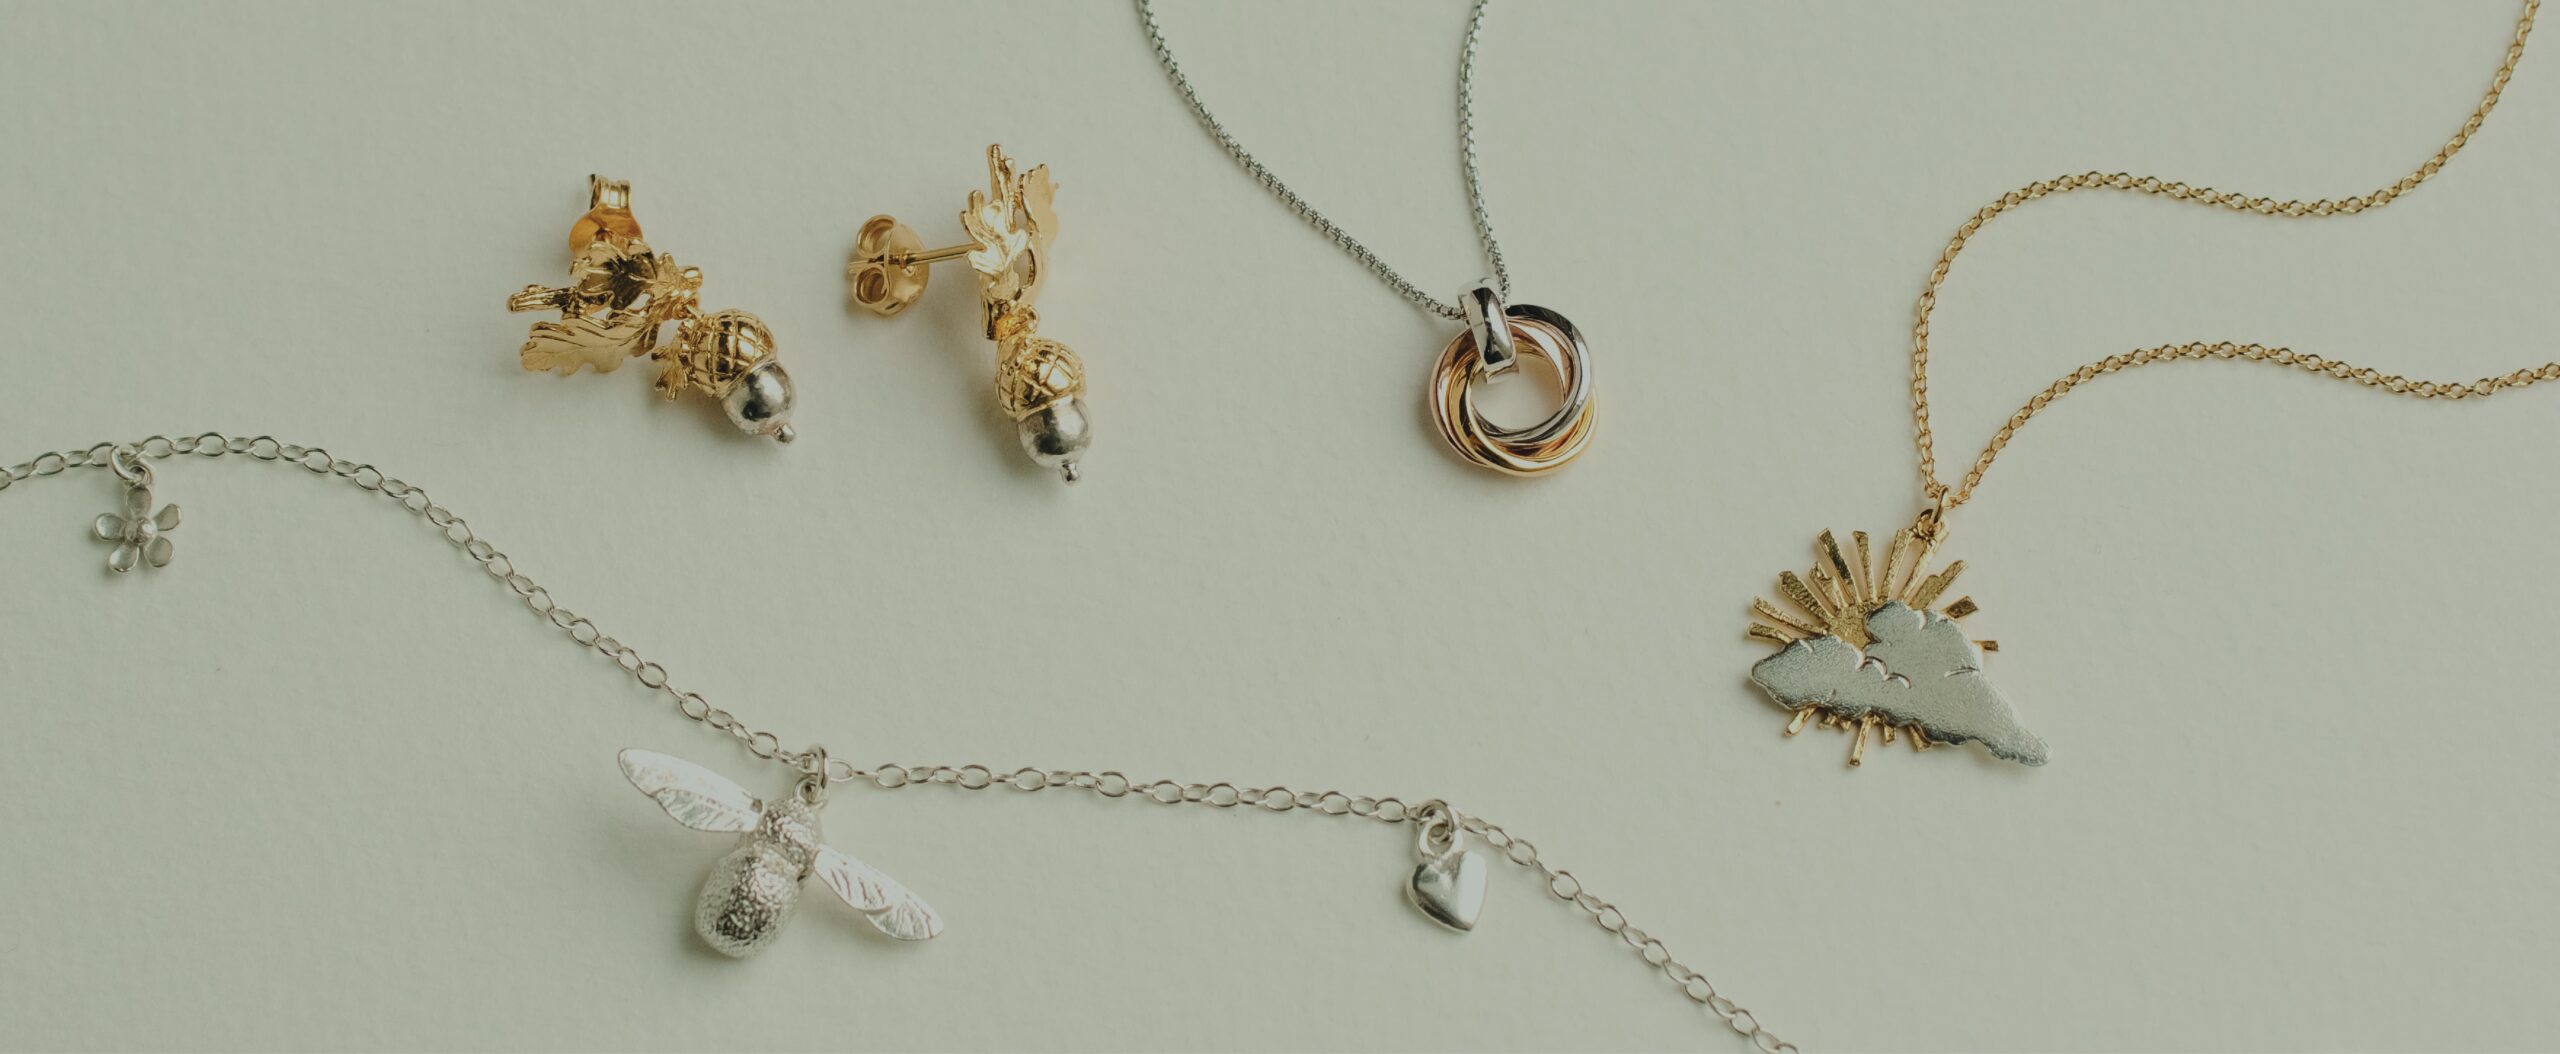 Jewellery Gifts under £200 from Silverado jewellery